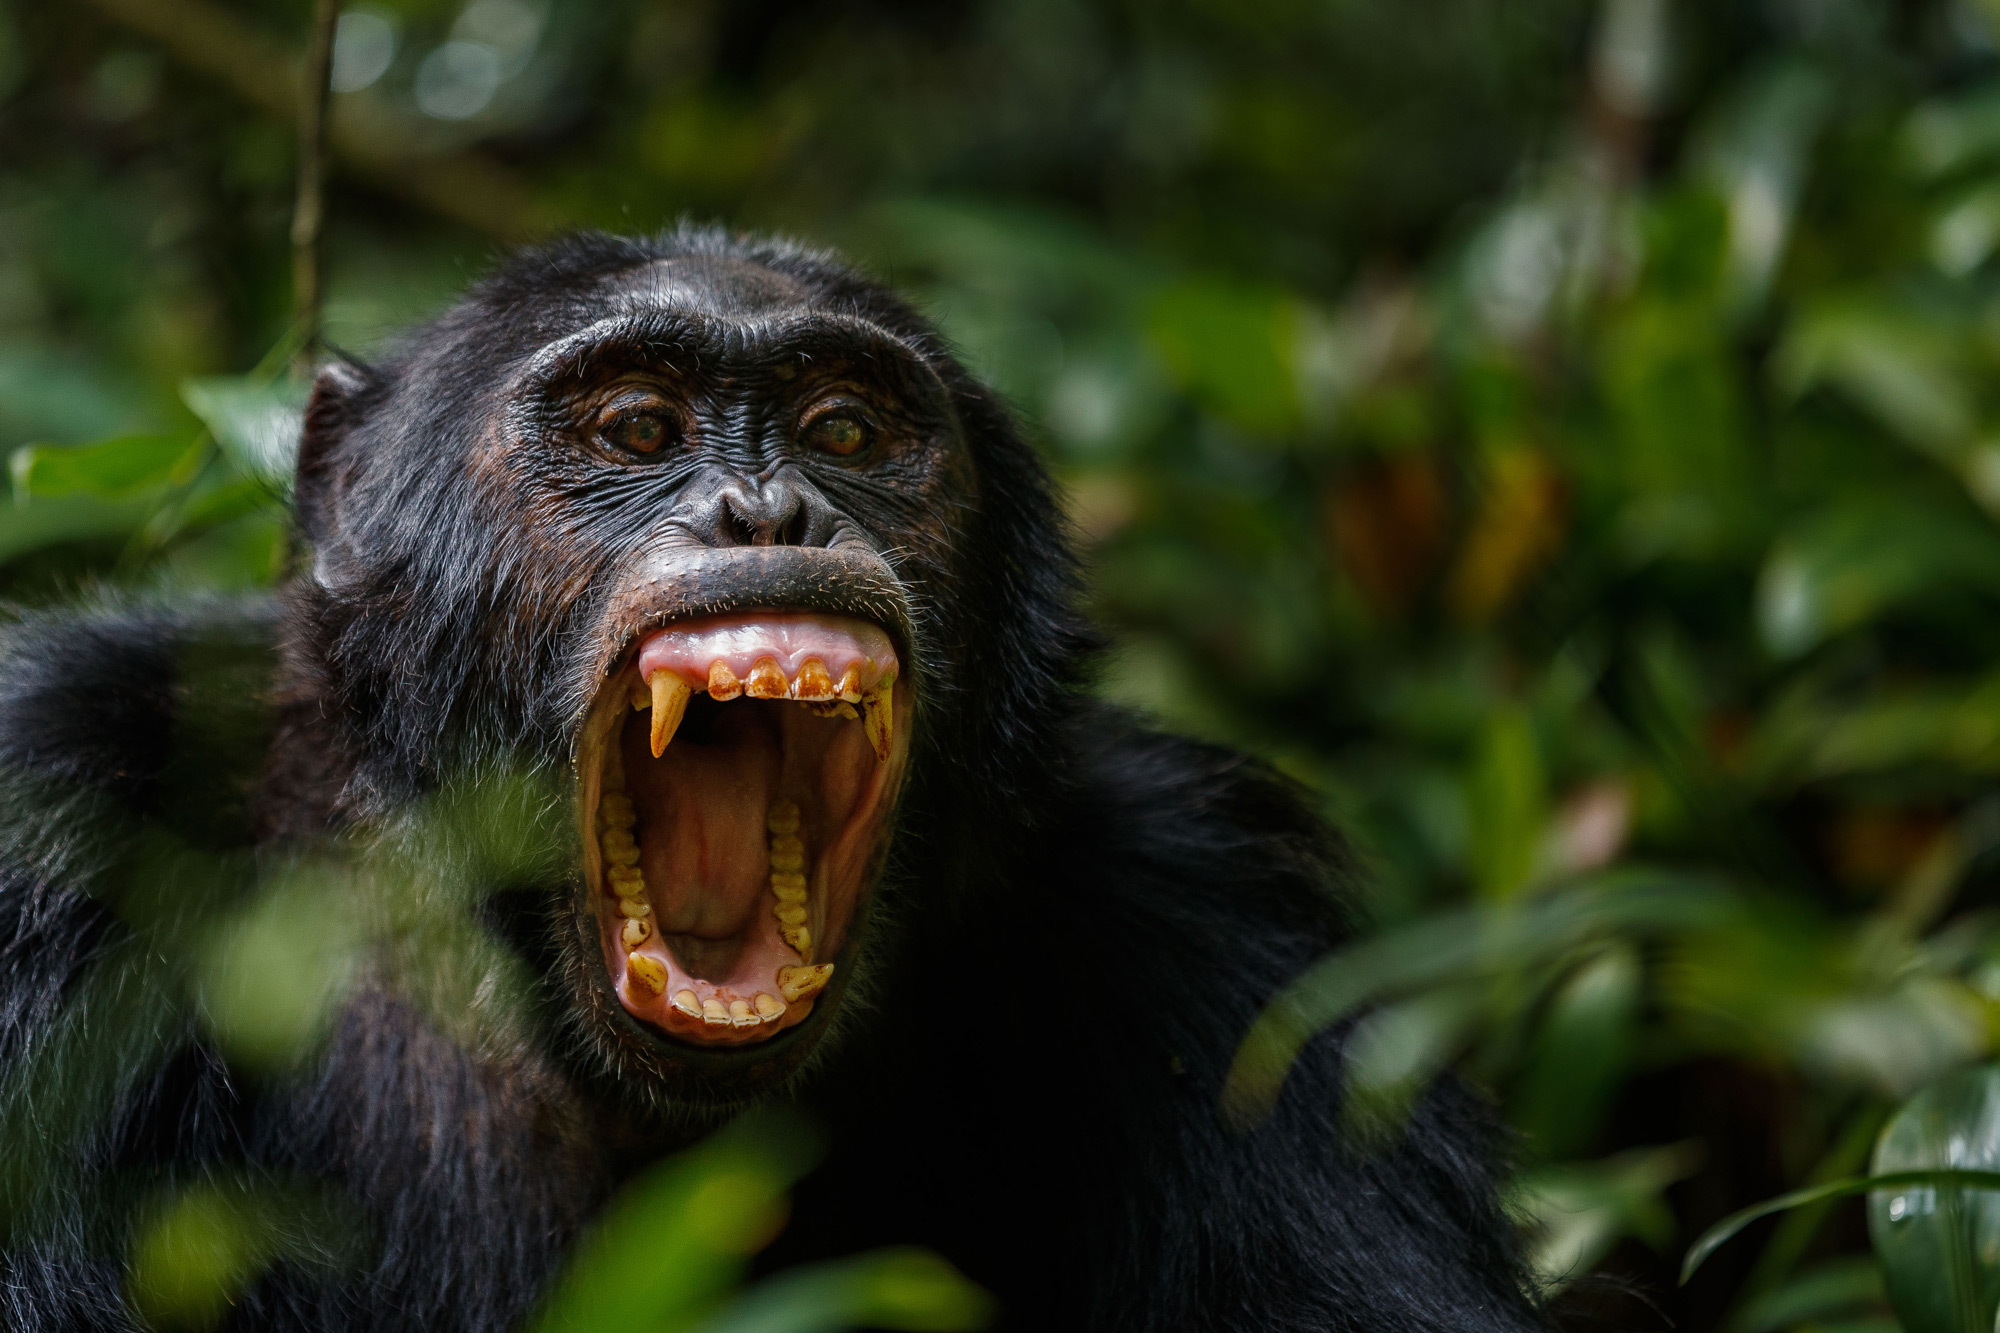 Threat display from a chimpanzee in Bwindi Impenetrable National Park, Uganda © Thorsten Hanewald